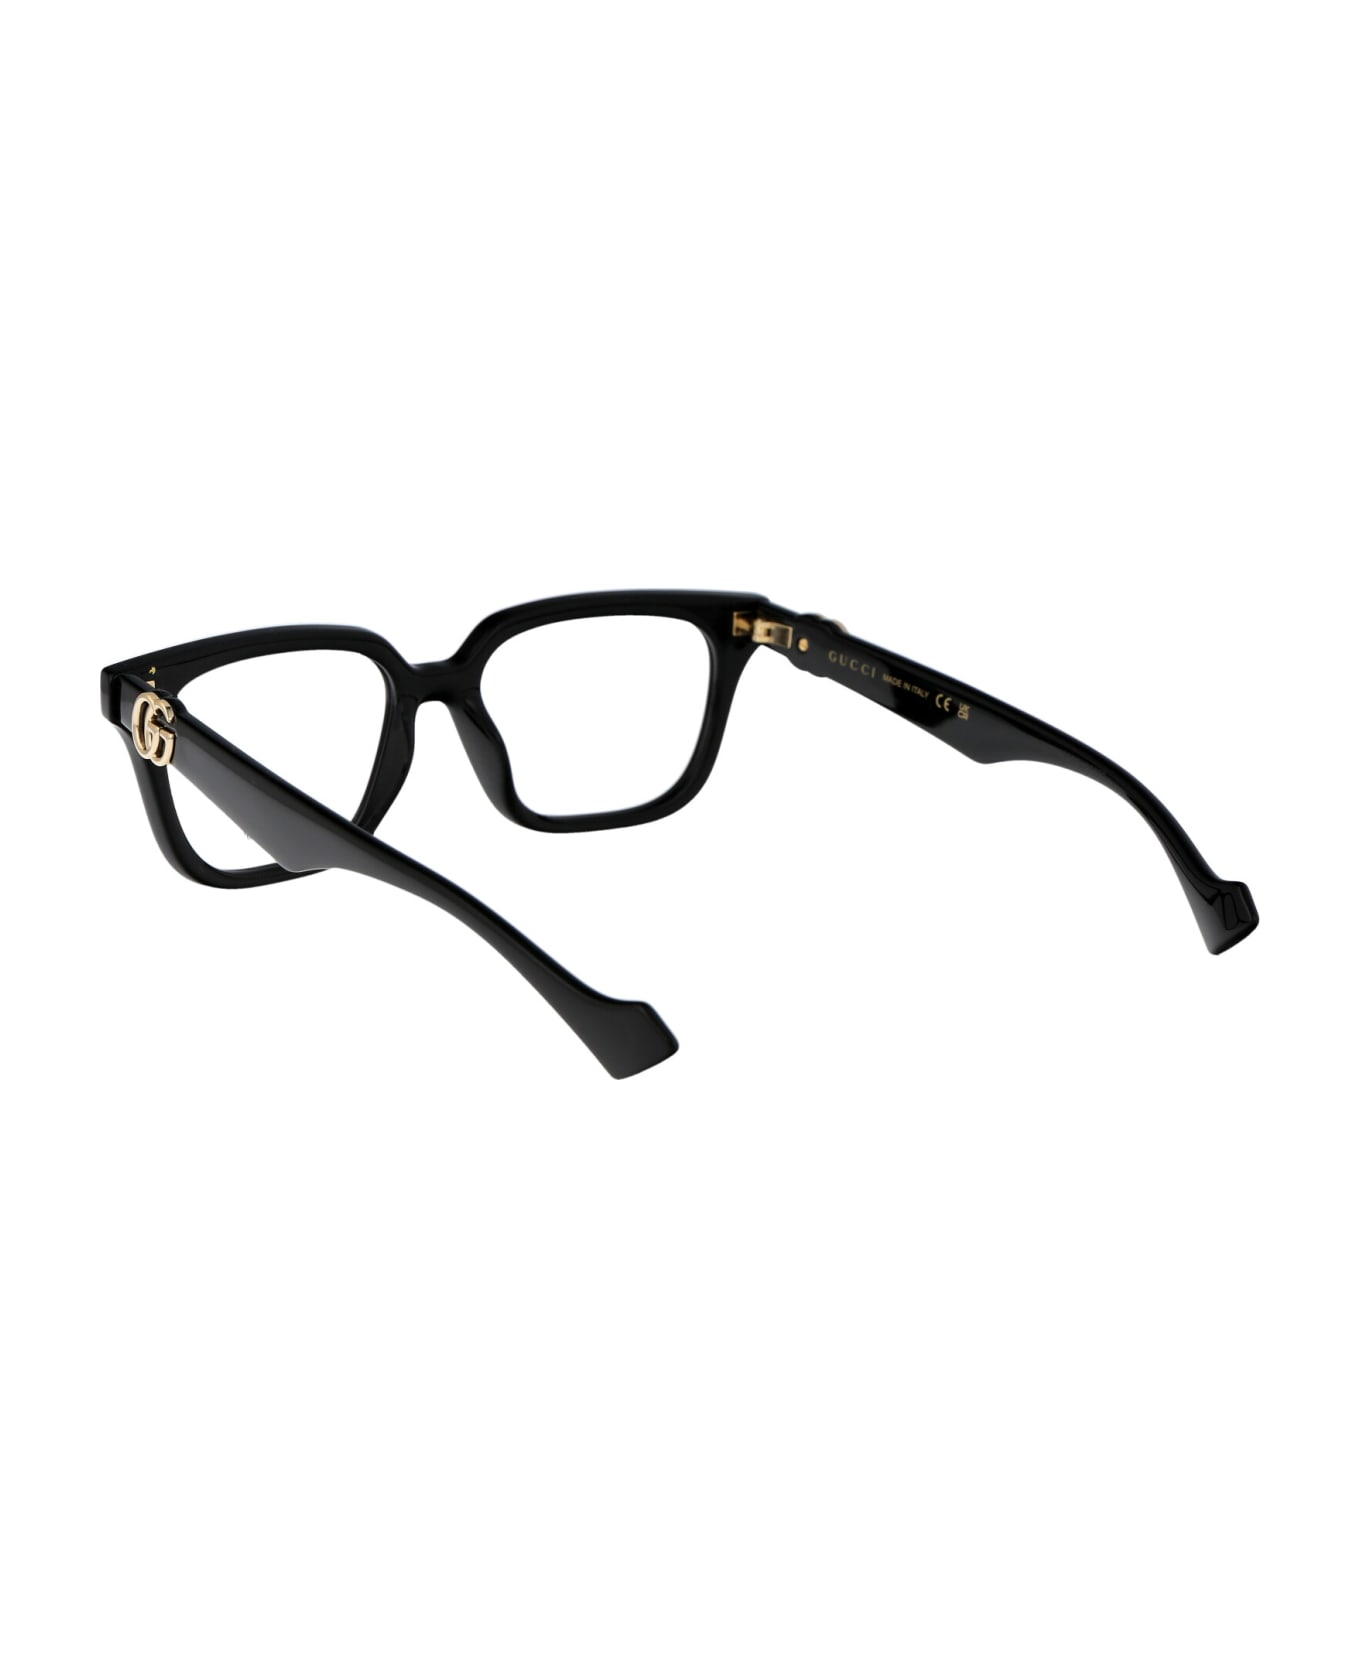 Gucci Eyewear Gg1536o Glasses - 005 BLACK BLACK TRANSPARENT